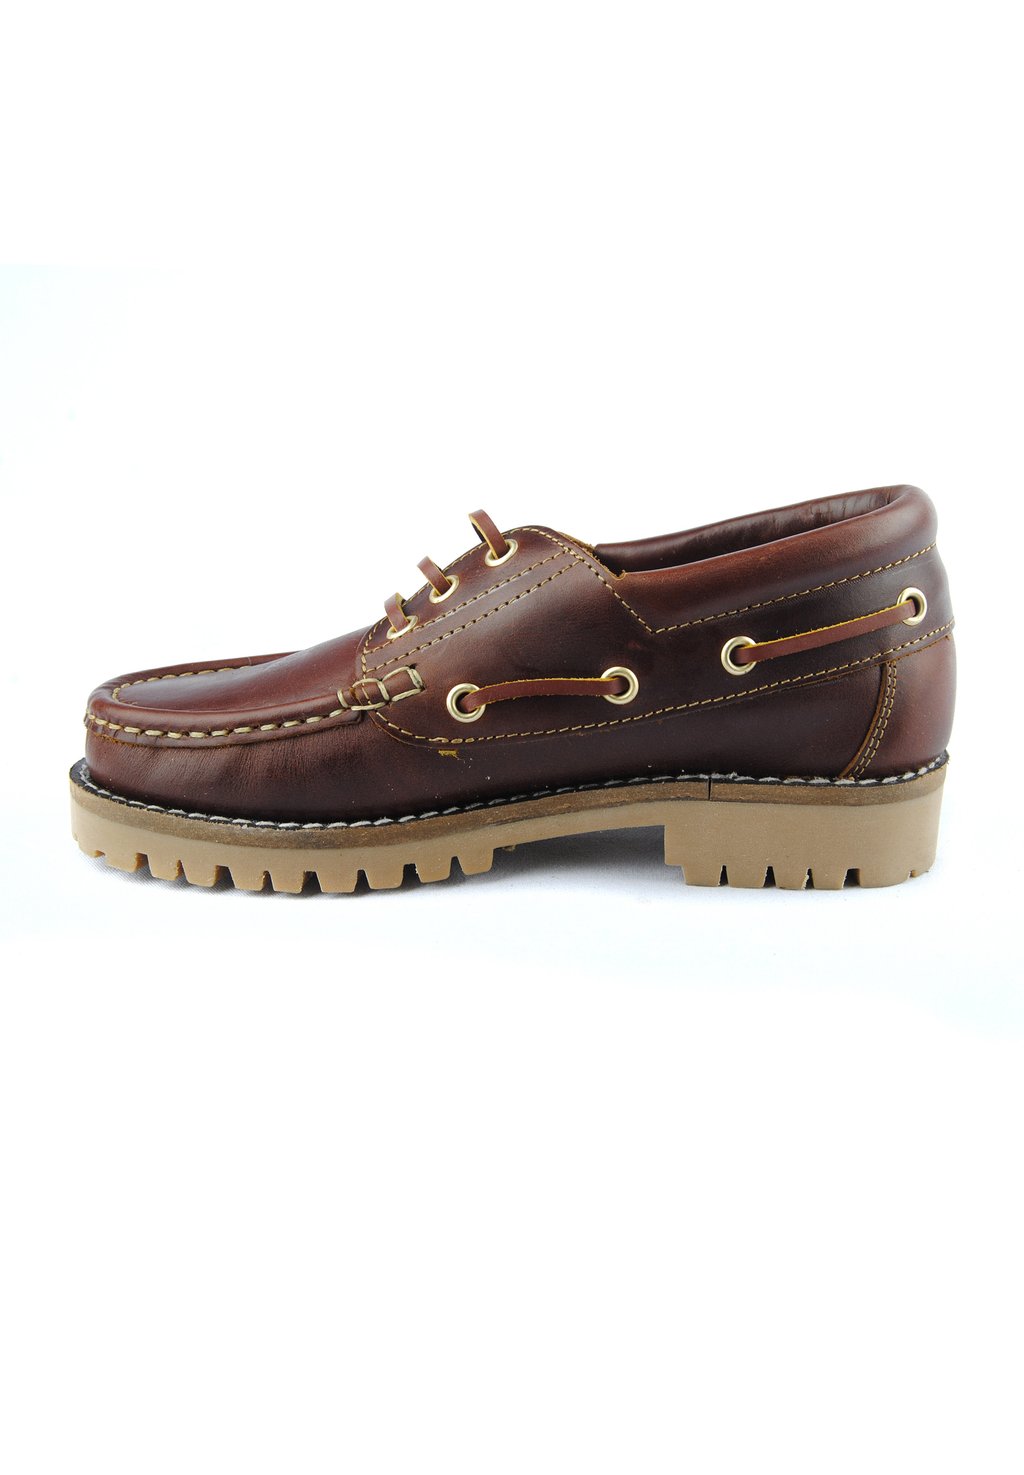 Туфли на шнуровке OSCAR Sotoalto, коричневый туфли sotoalto by brosshoes туфли